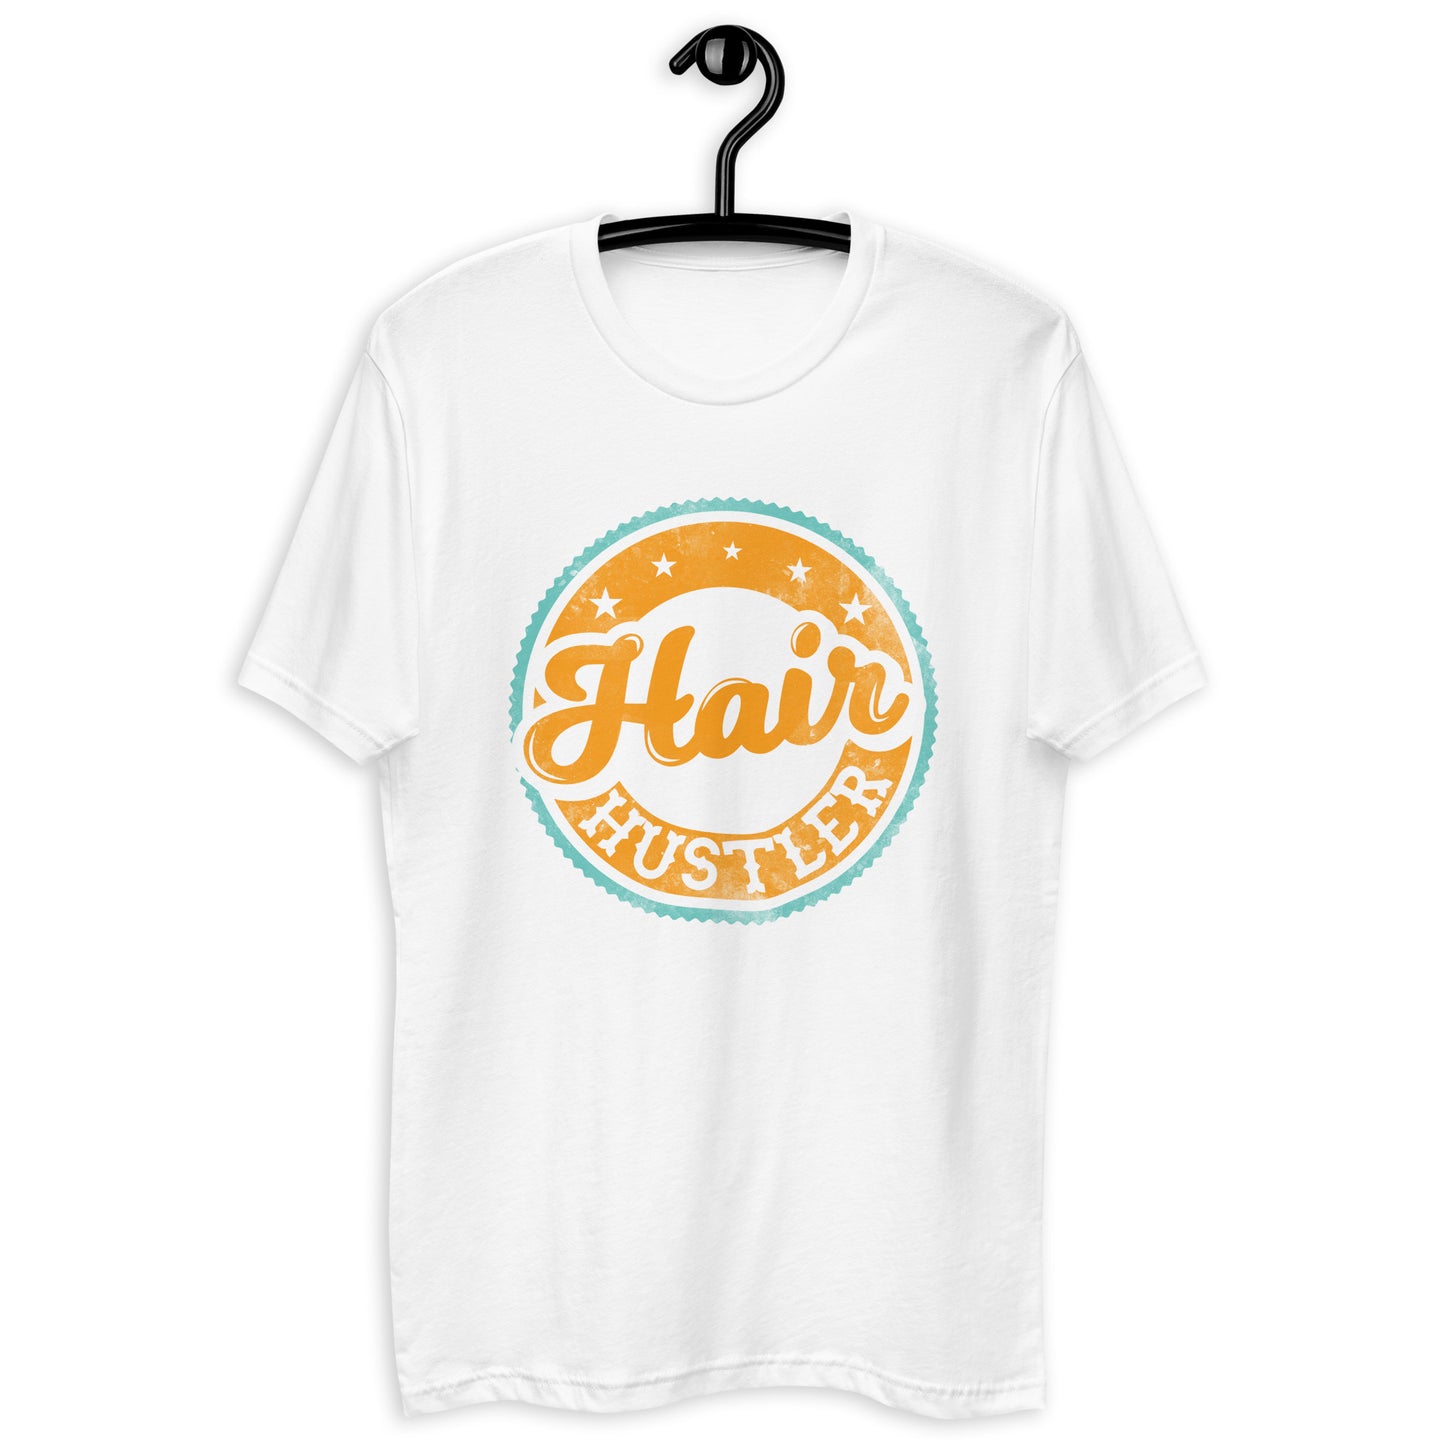 Hair Hustler T-shirt